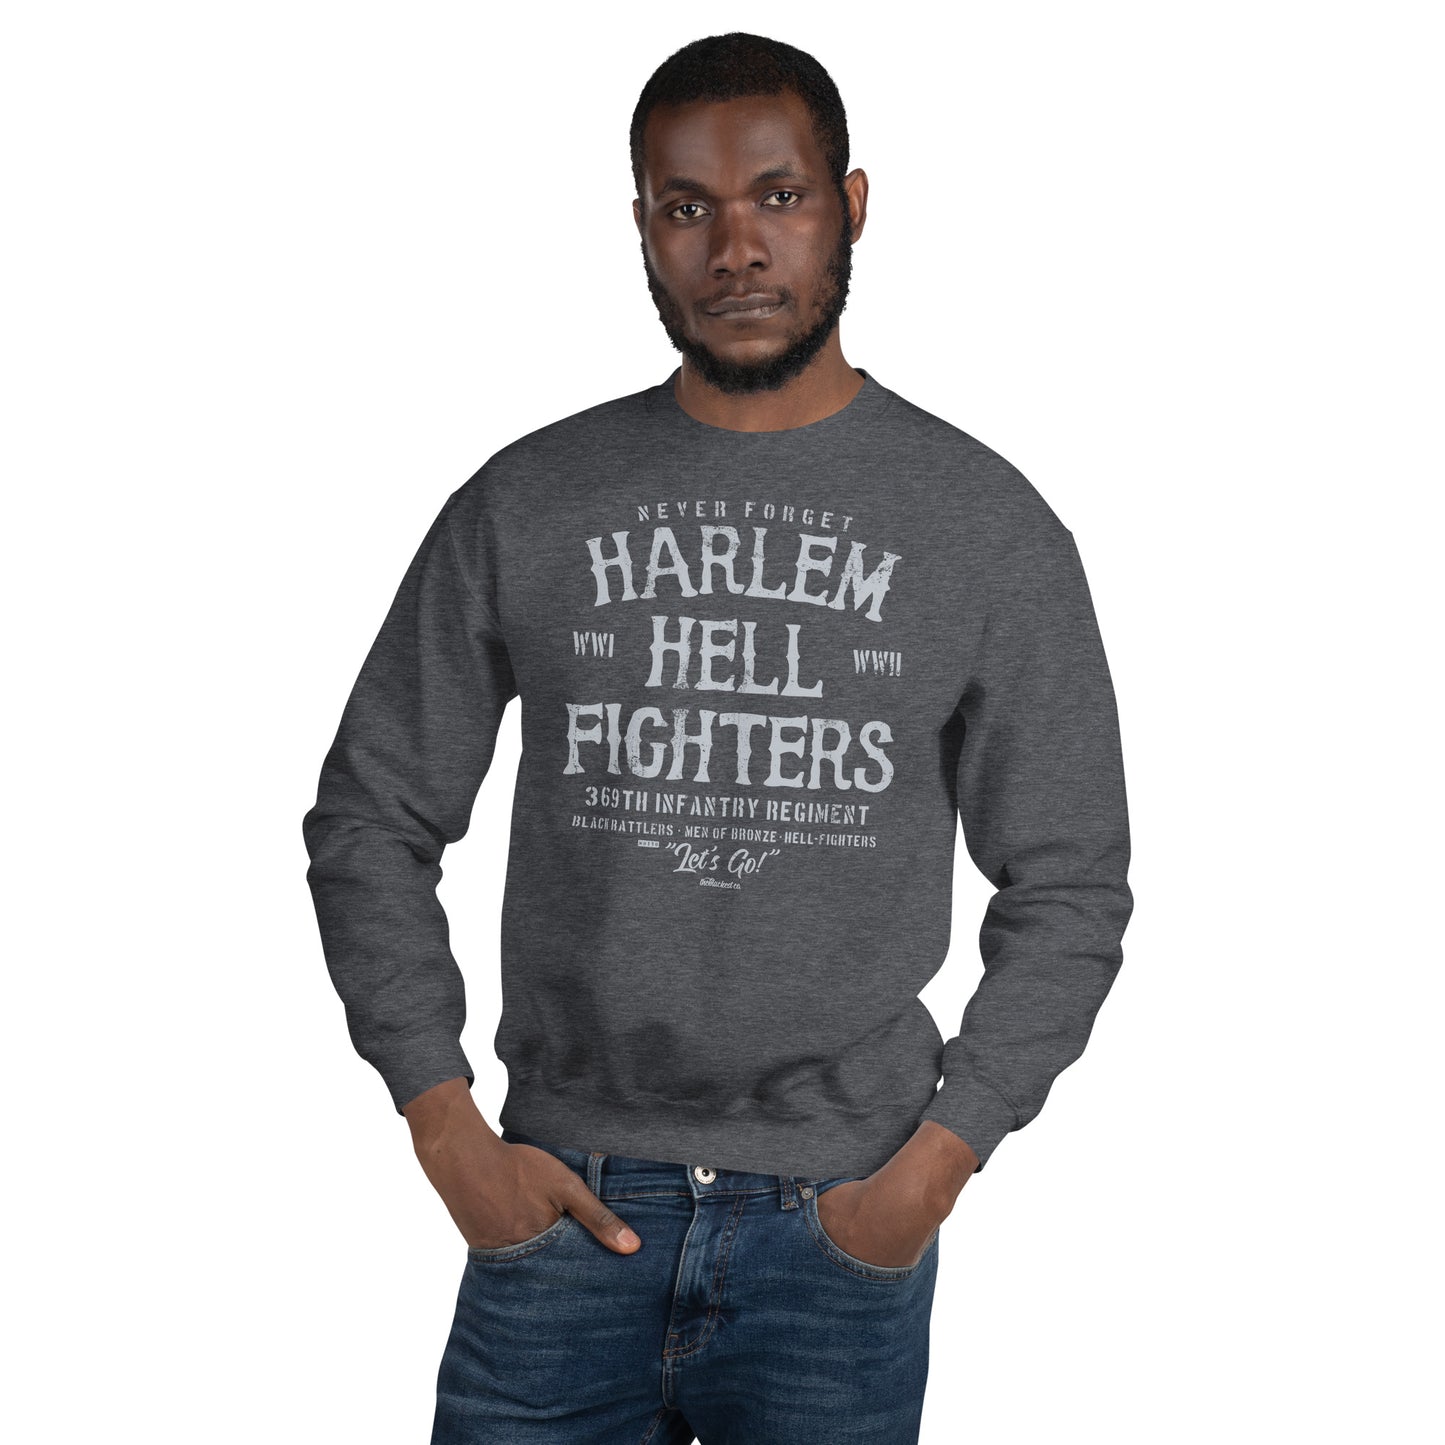 man wearing dark grey sweatshirt with white text reading harlem hellfighters